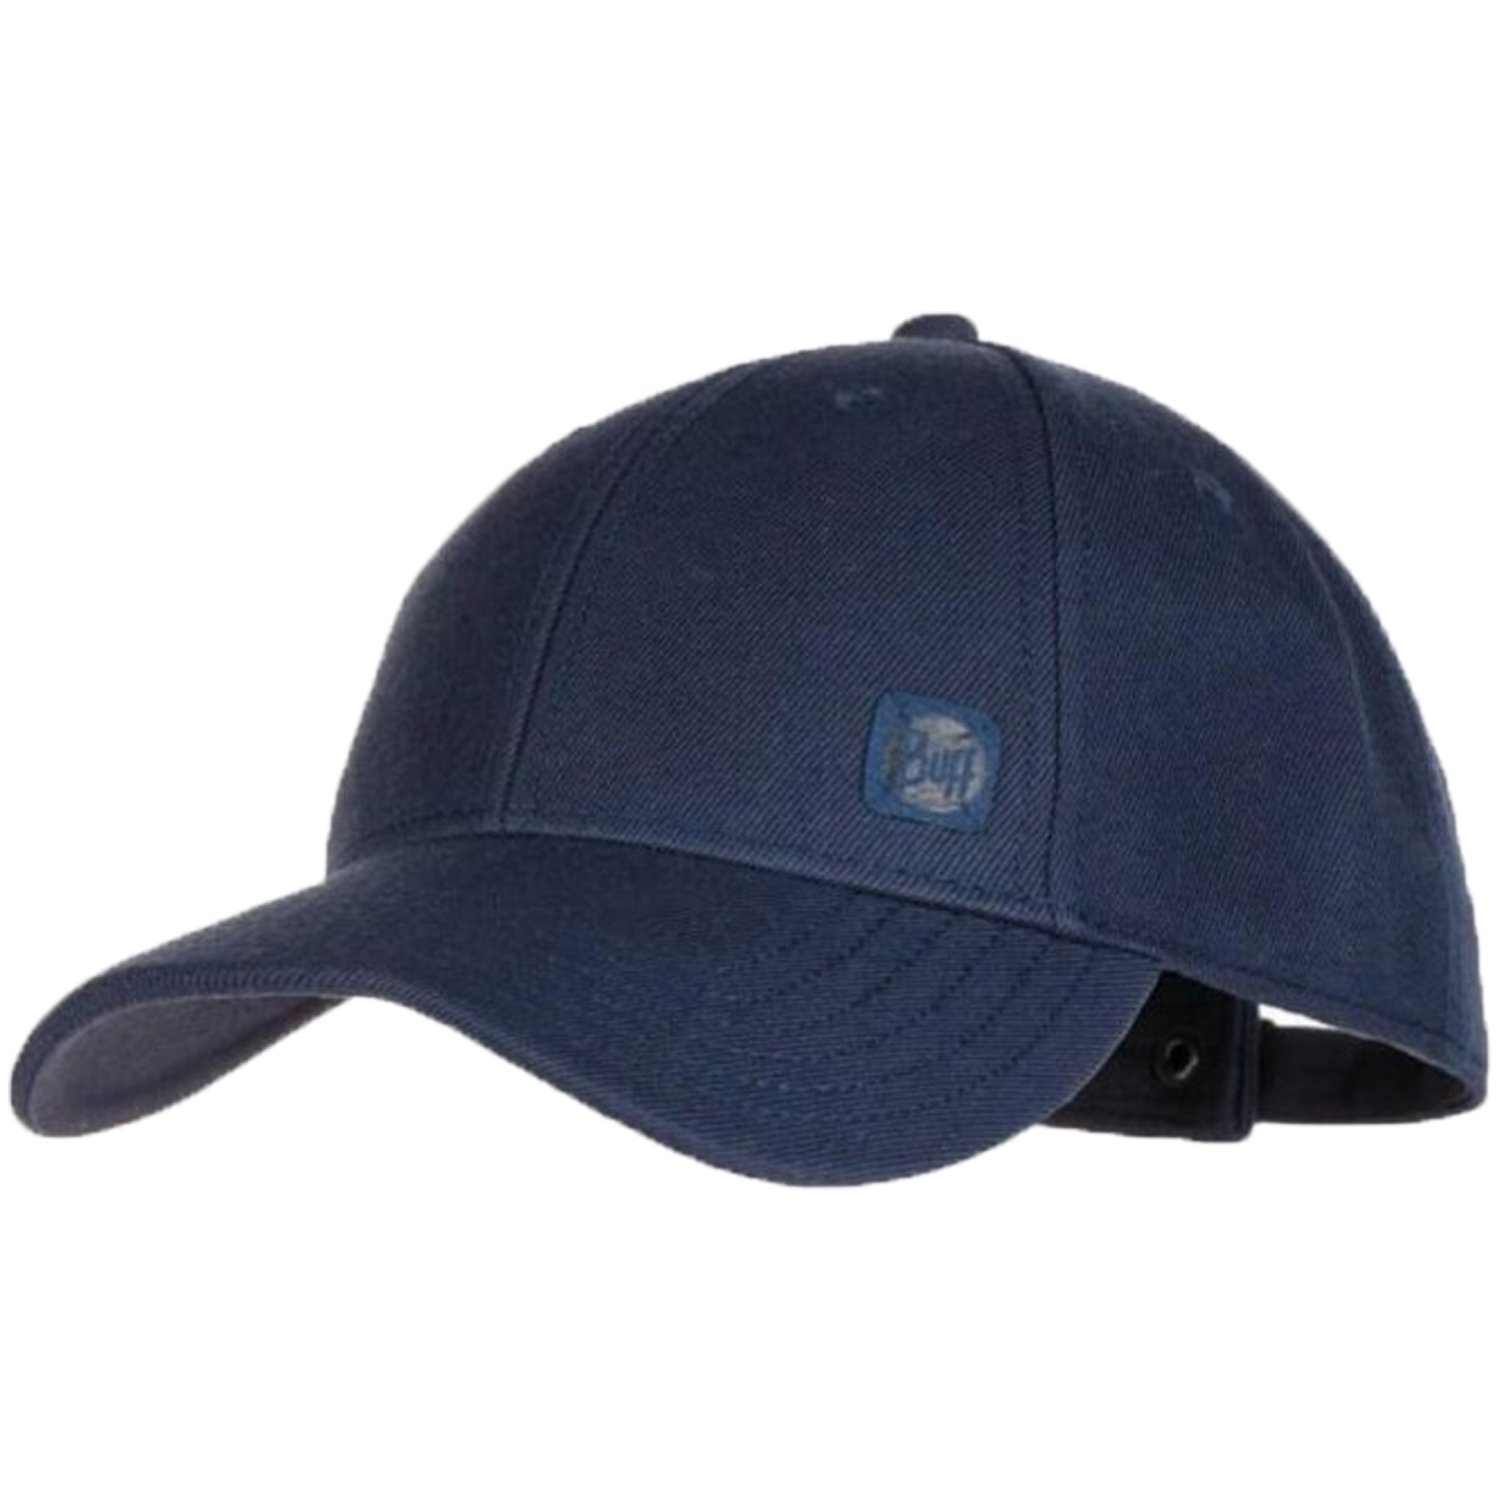 Кепка спортивная Buff Baseball Cap Brokes Night Blue, унисекс, 131316.779.10.00 кепка велосипедная saucony doubleback hat opal blue 2021 sau900014 op